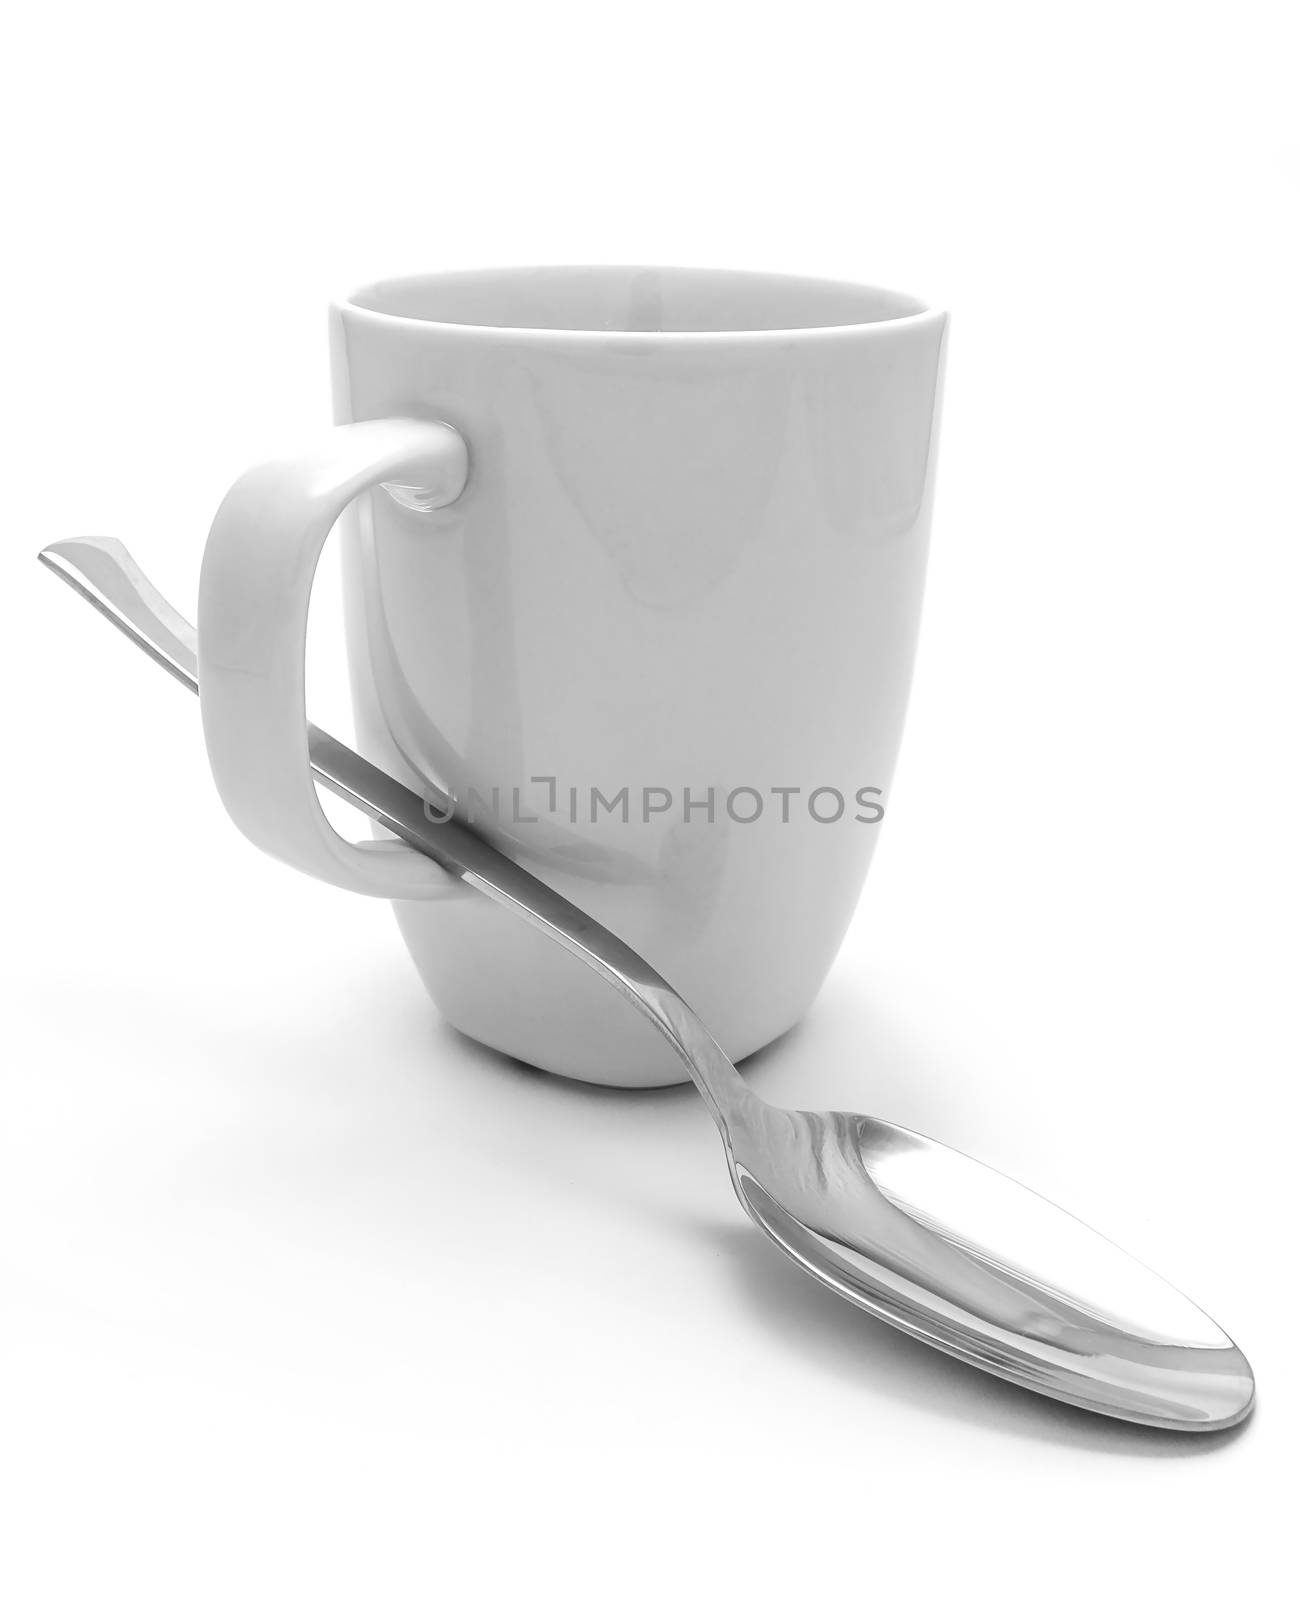 Mug and spoon by dynamicfoto